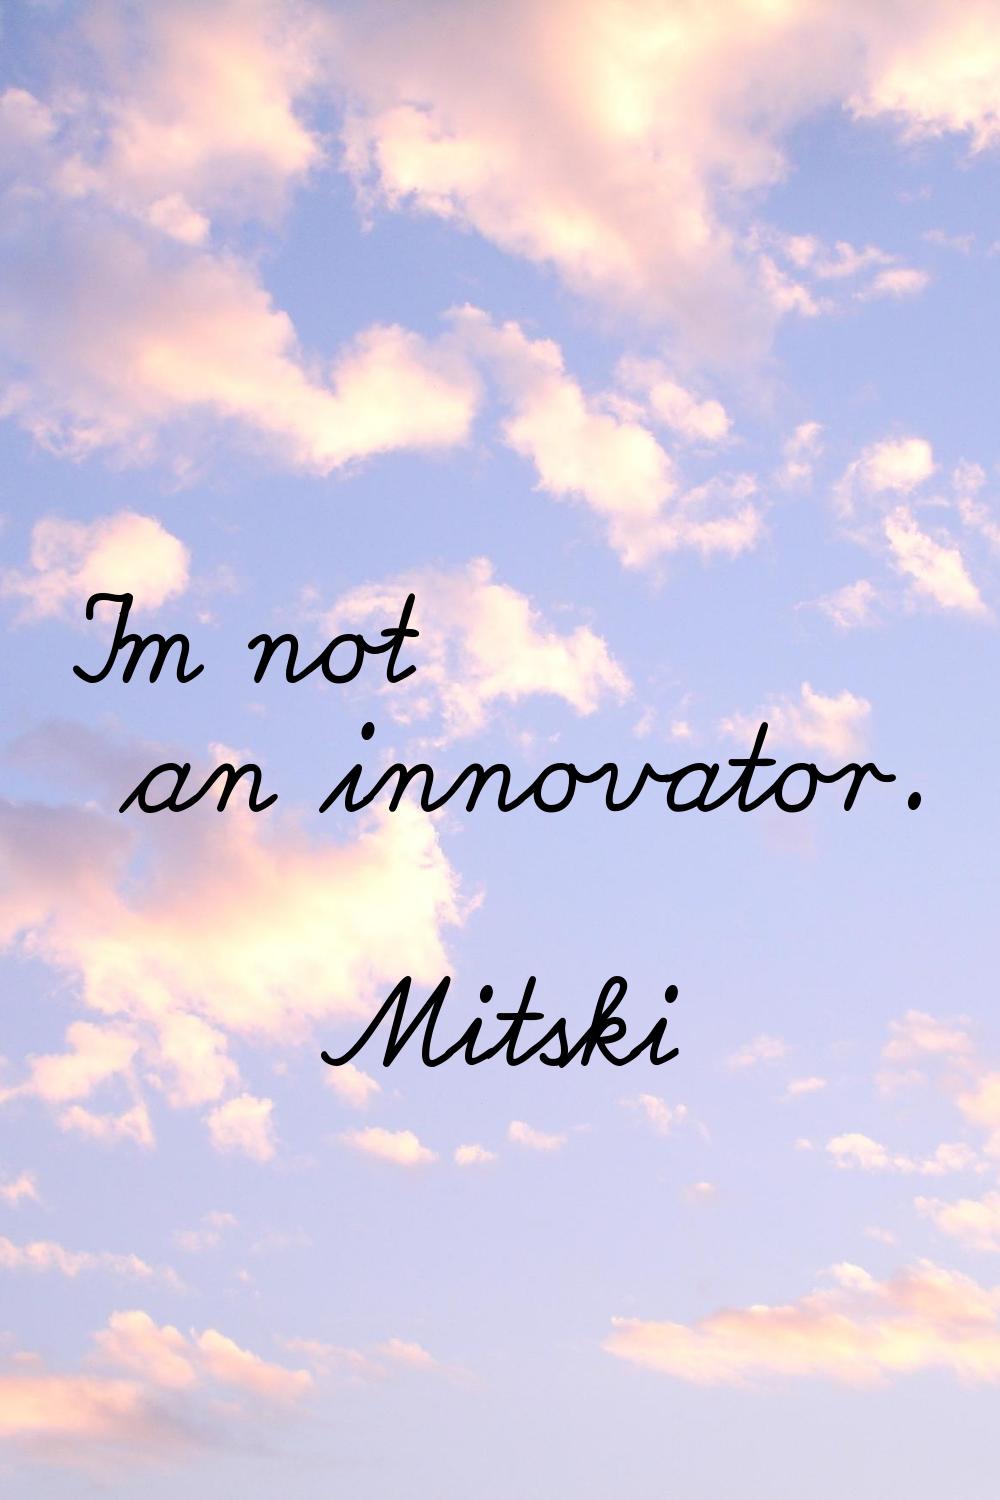 I'm not an innovator.